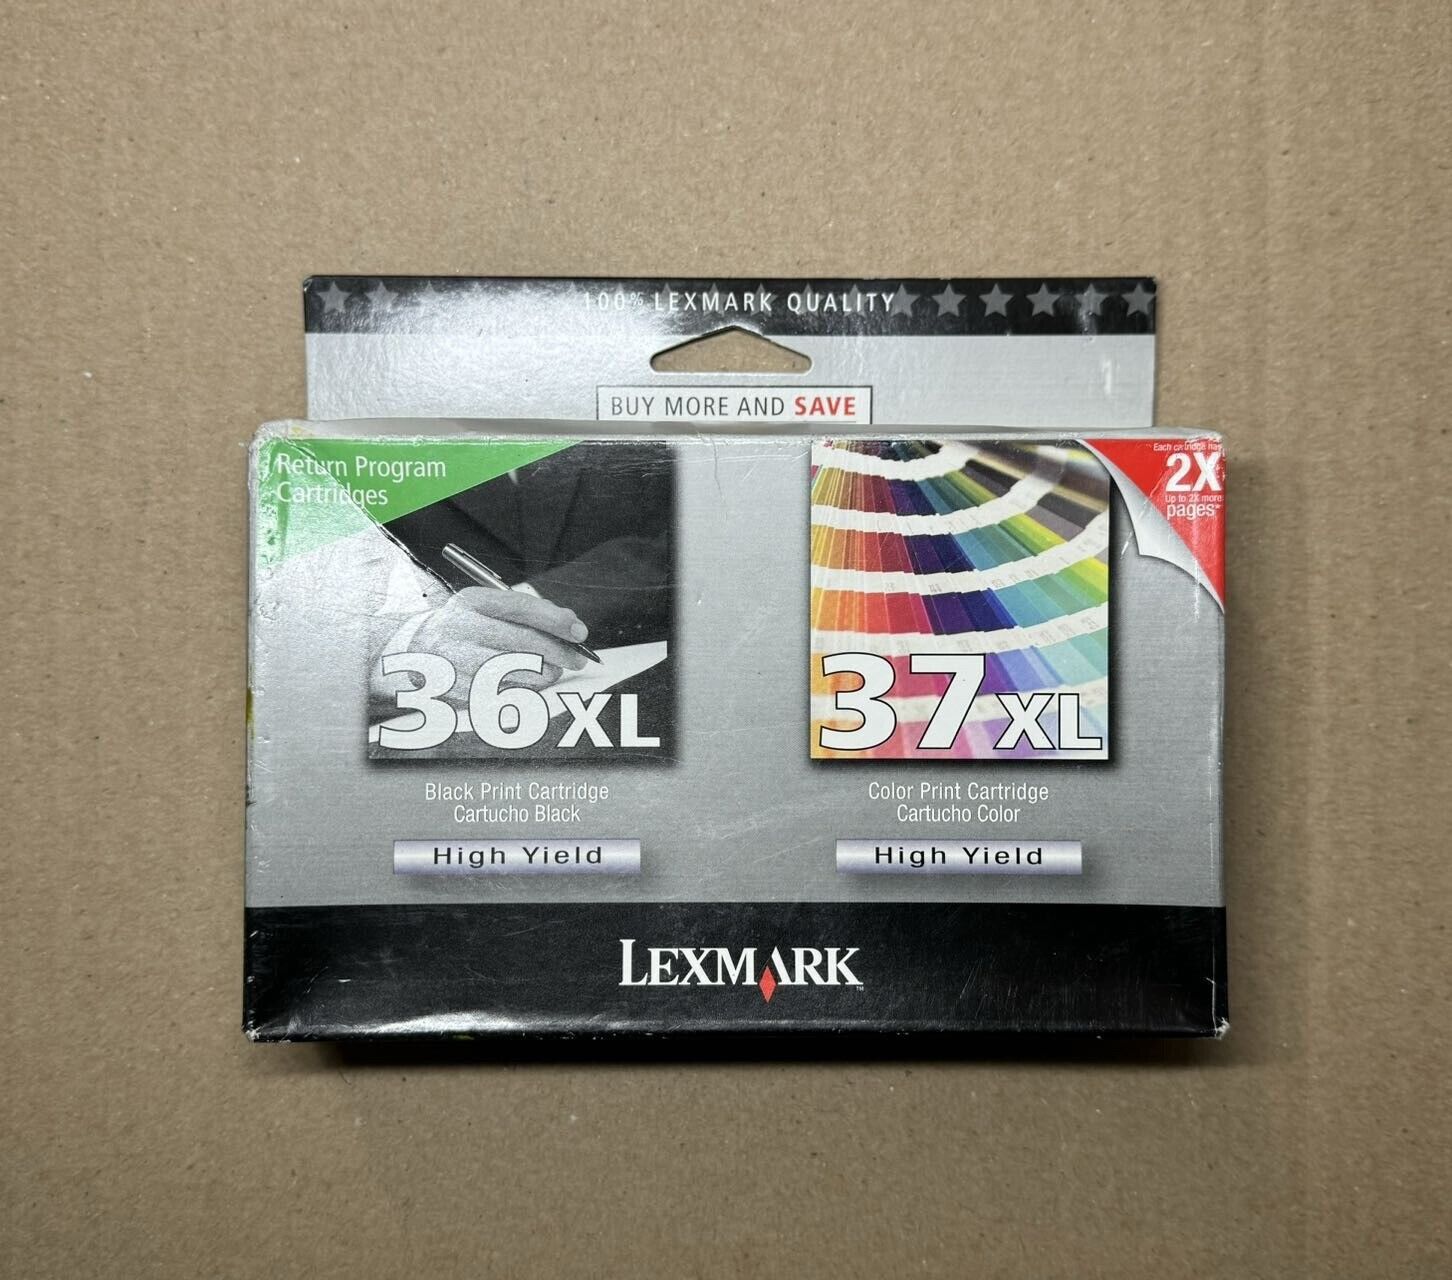 New Genuine OEM Lexmark 36XL Black 37XL Color Ink Cartridges - New Sealed